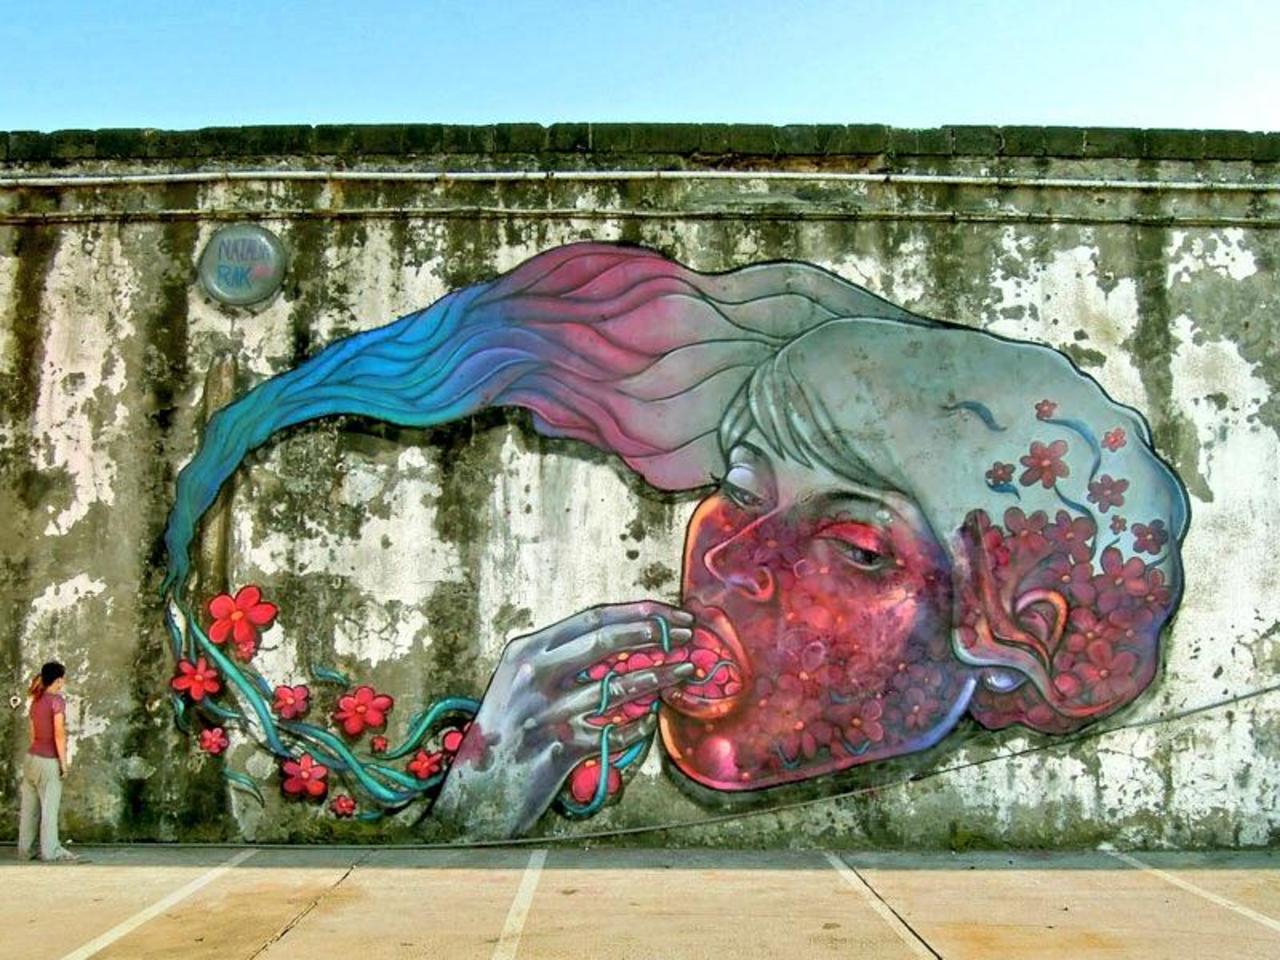 "@loolek: @5putnik1 RT @Pitchuskita: Natalia Rak / Circle of nature"
Azores, 2012

#streetart #art #graffiti #mural http://t.co/i8YEREaNYA"